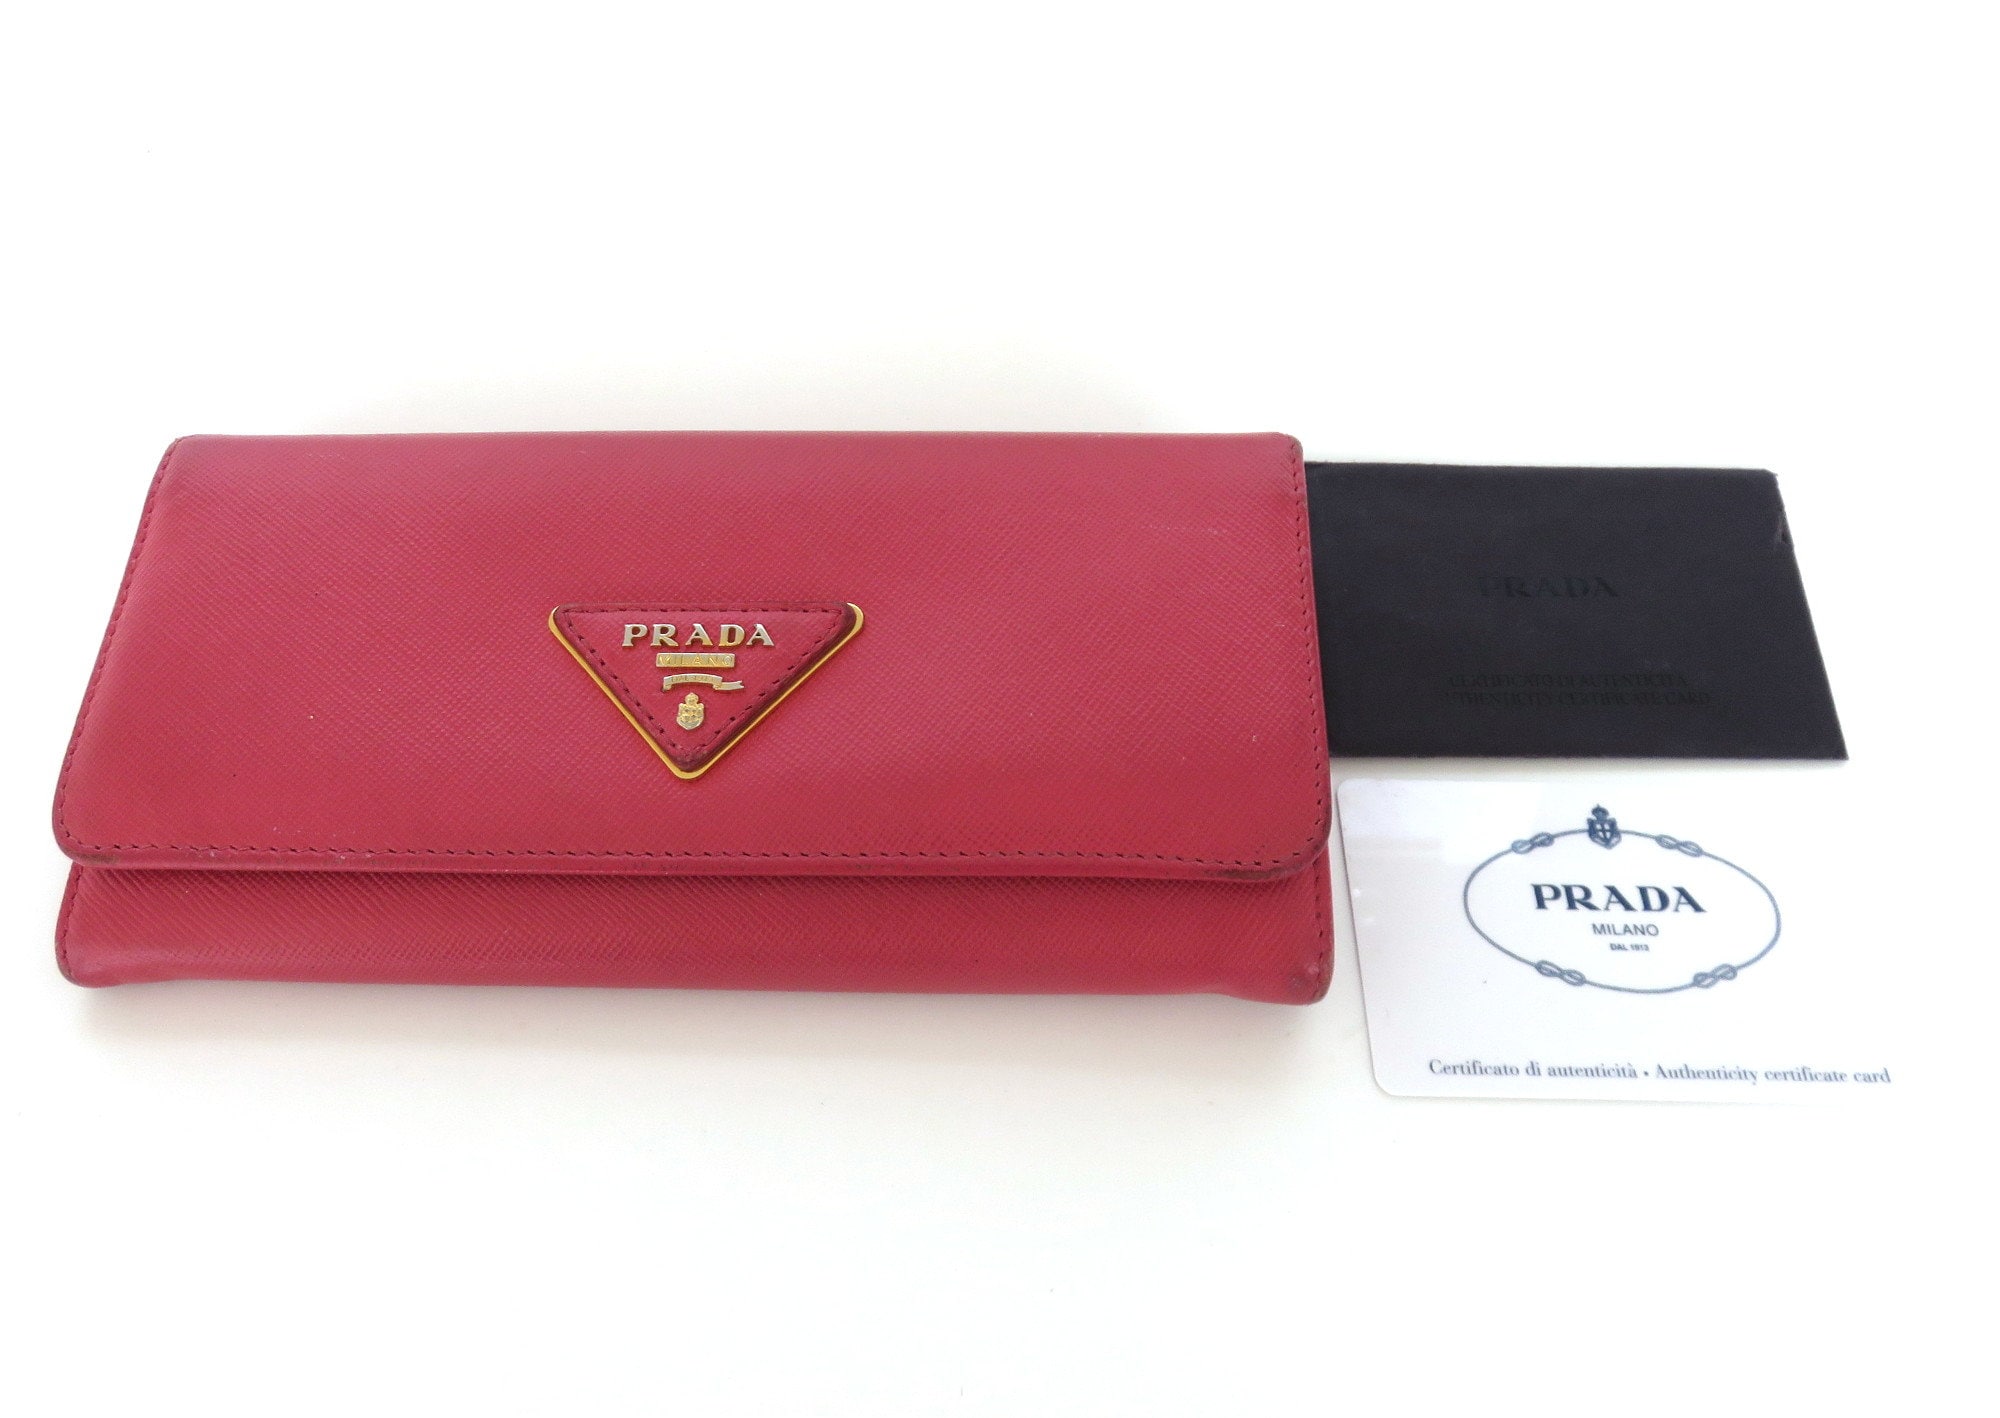 PRADA Saffiano Leather Bi-Fold Wallet Card Case Coin Purse Red - Final